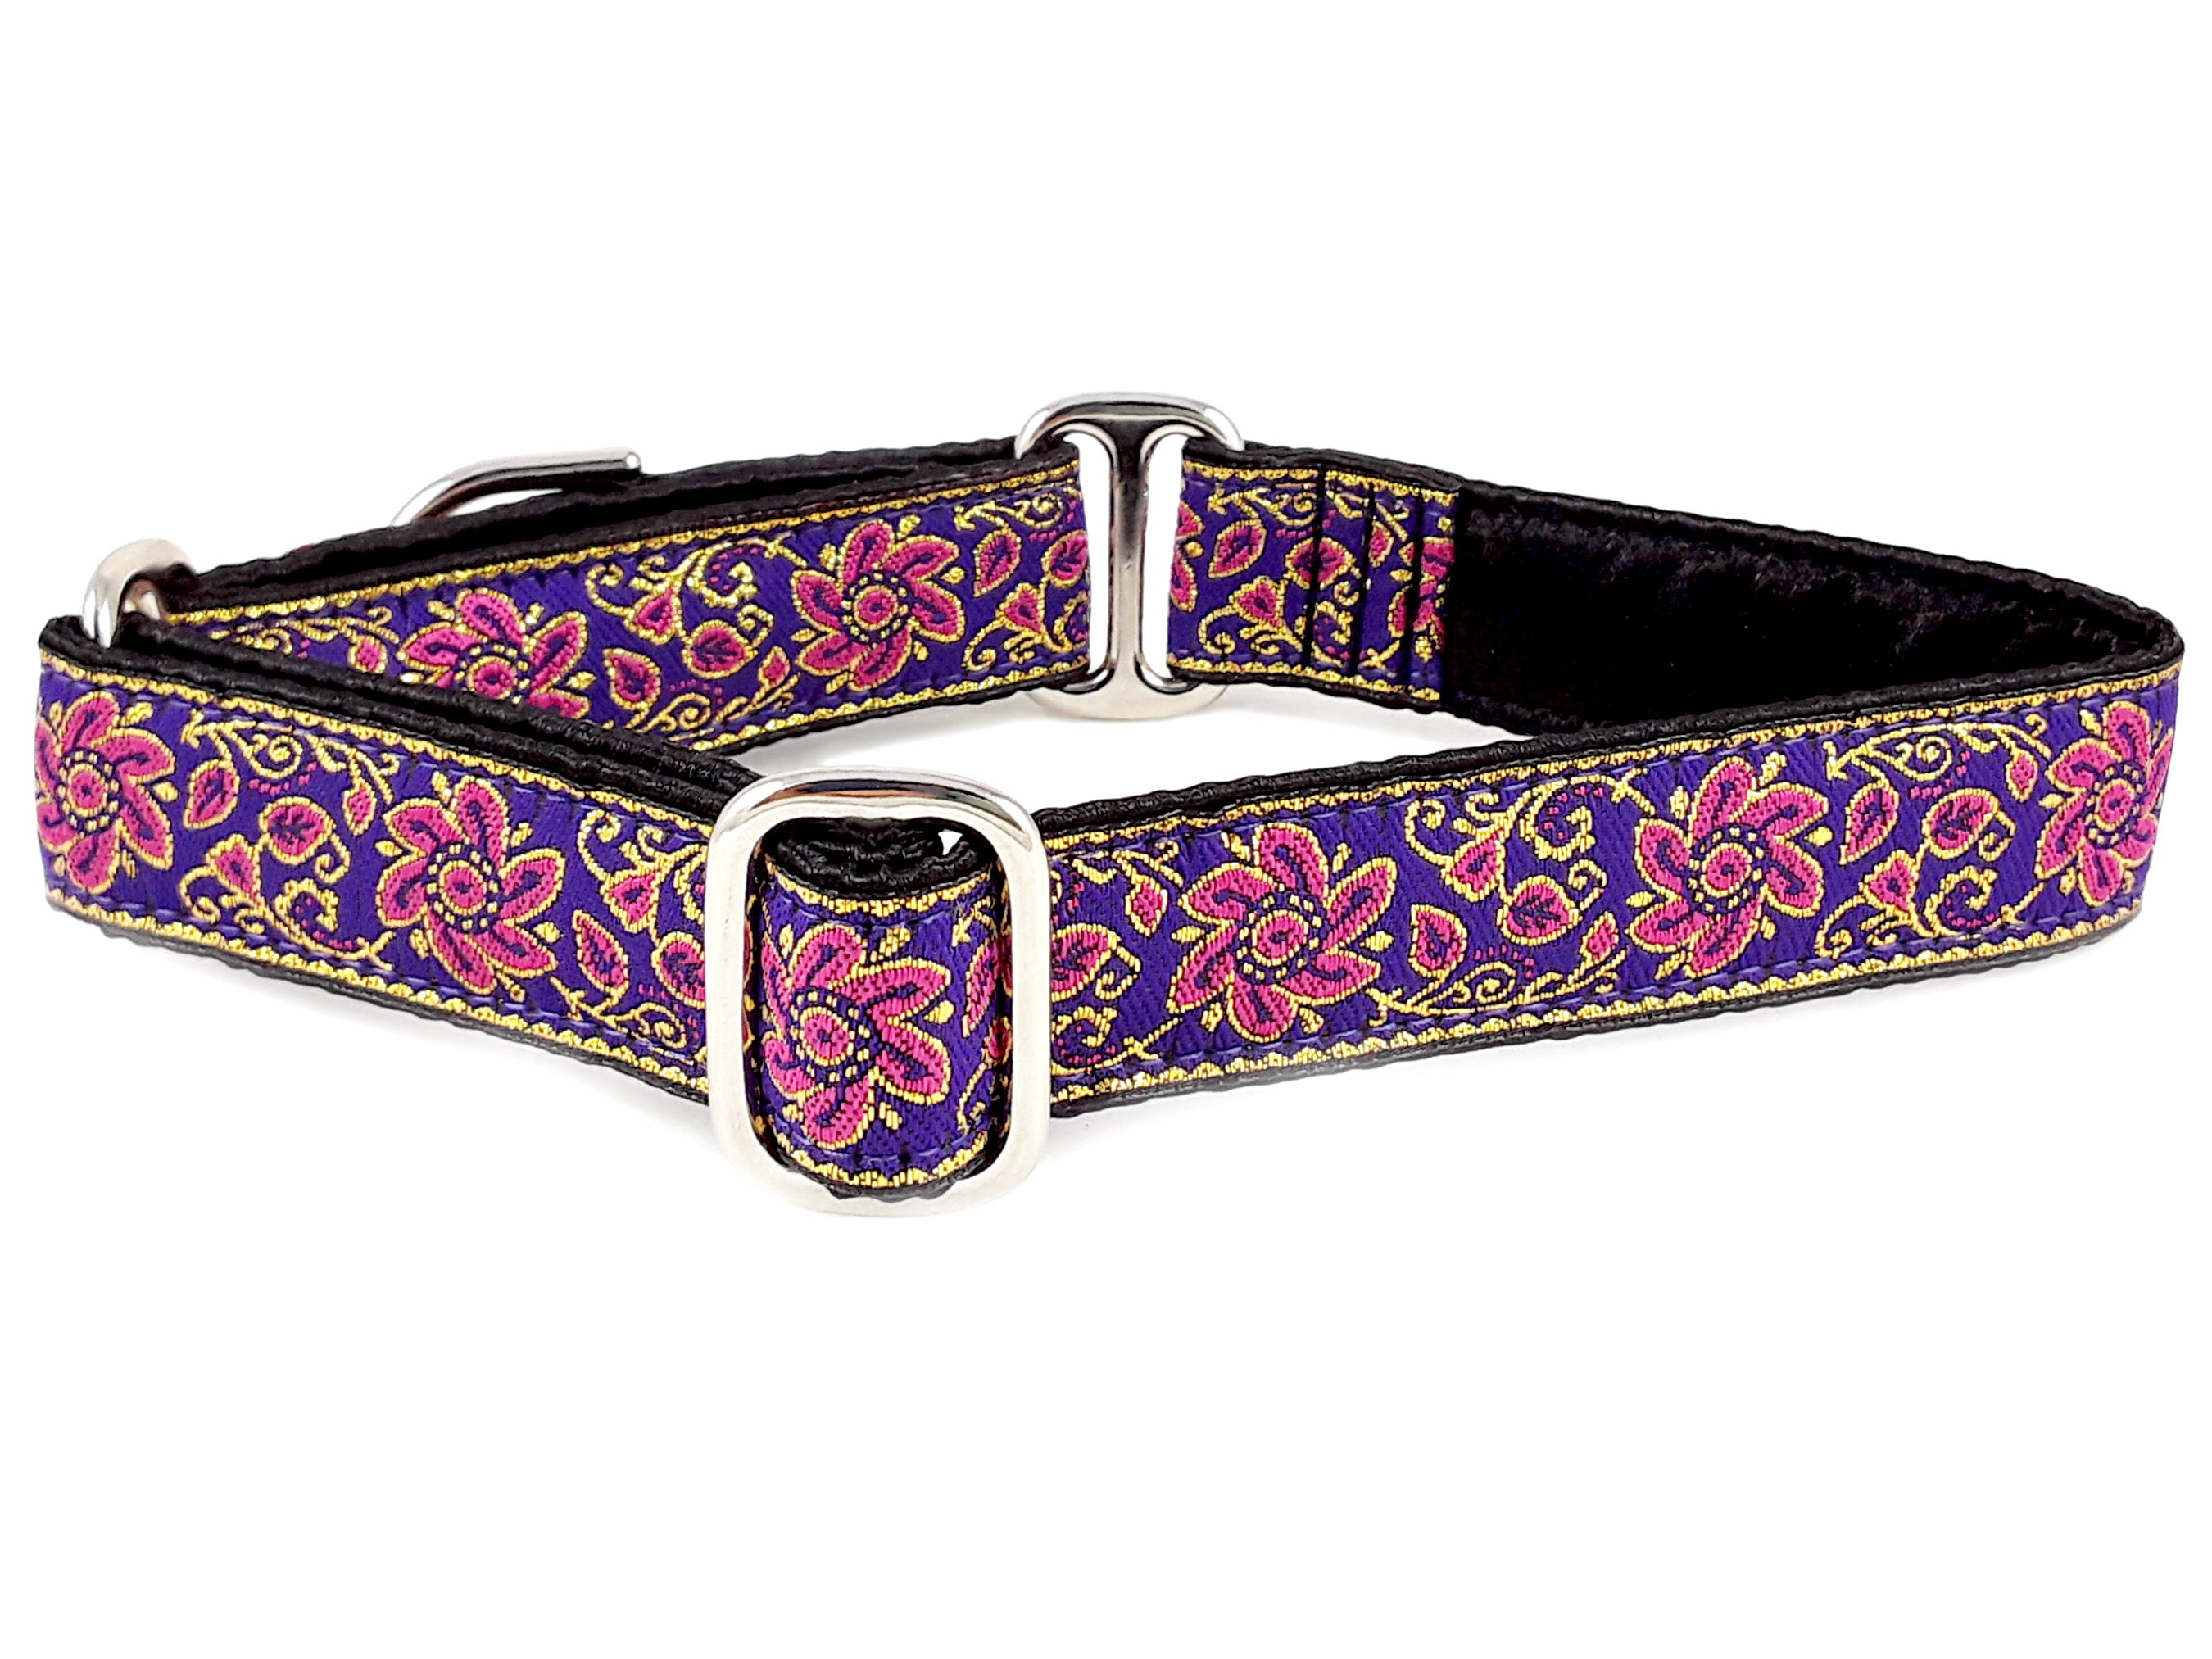 Sevilla Jacquard in Purple, Pink & Gold - Martingale Dog Collar or Buckle Dog Collar - 1" Width